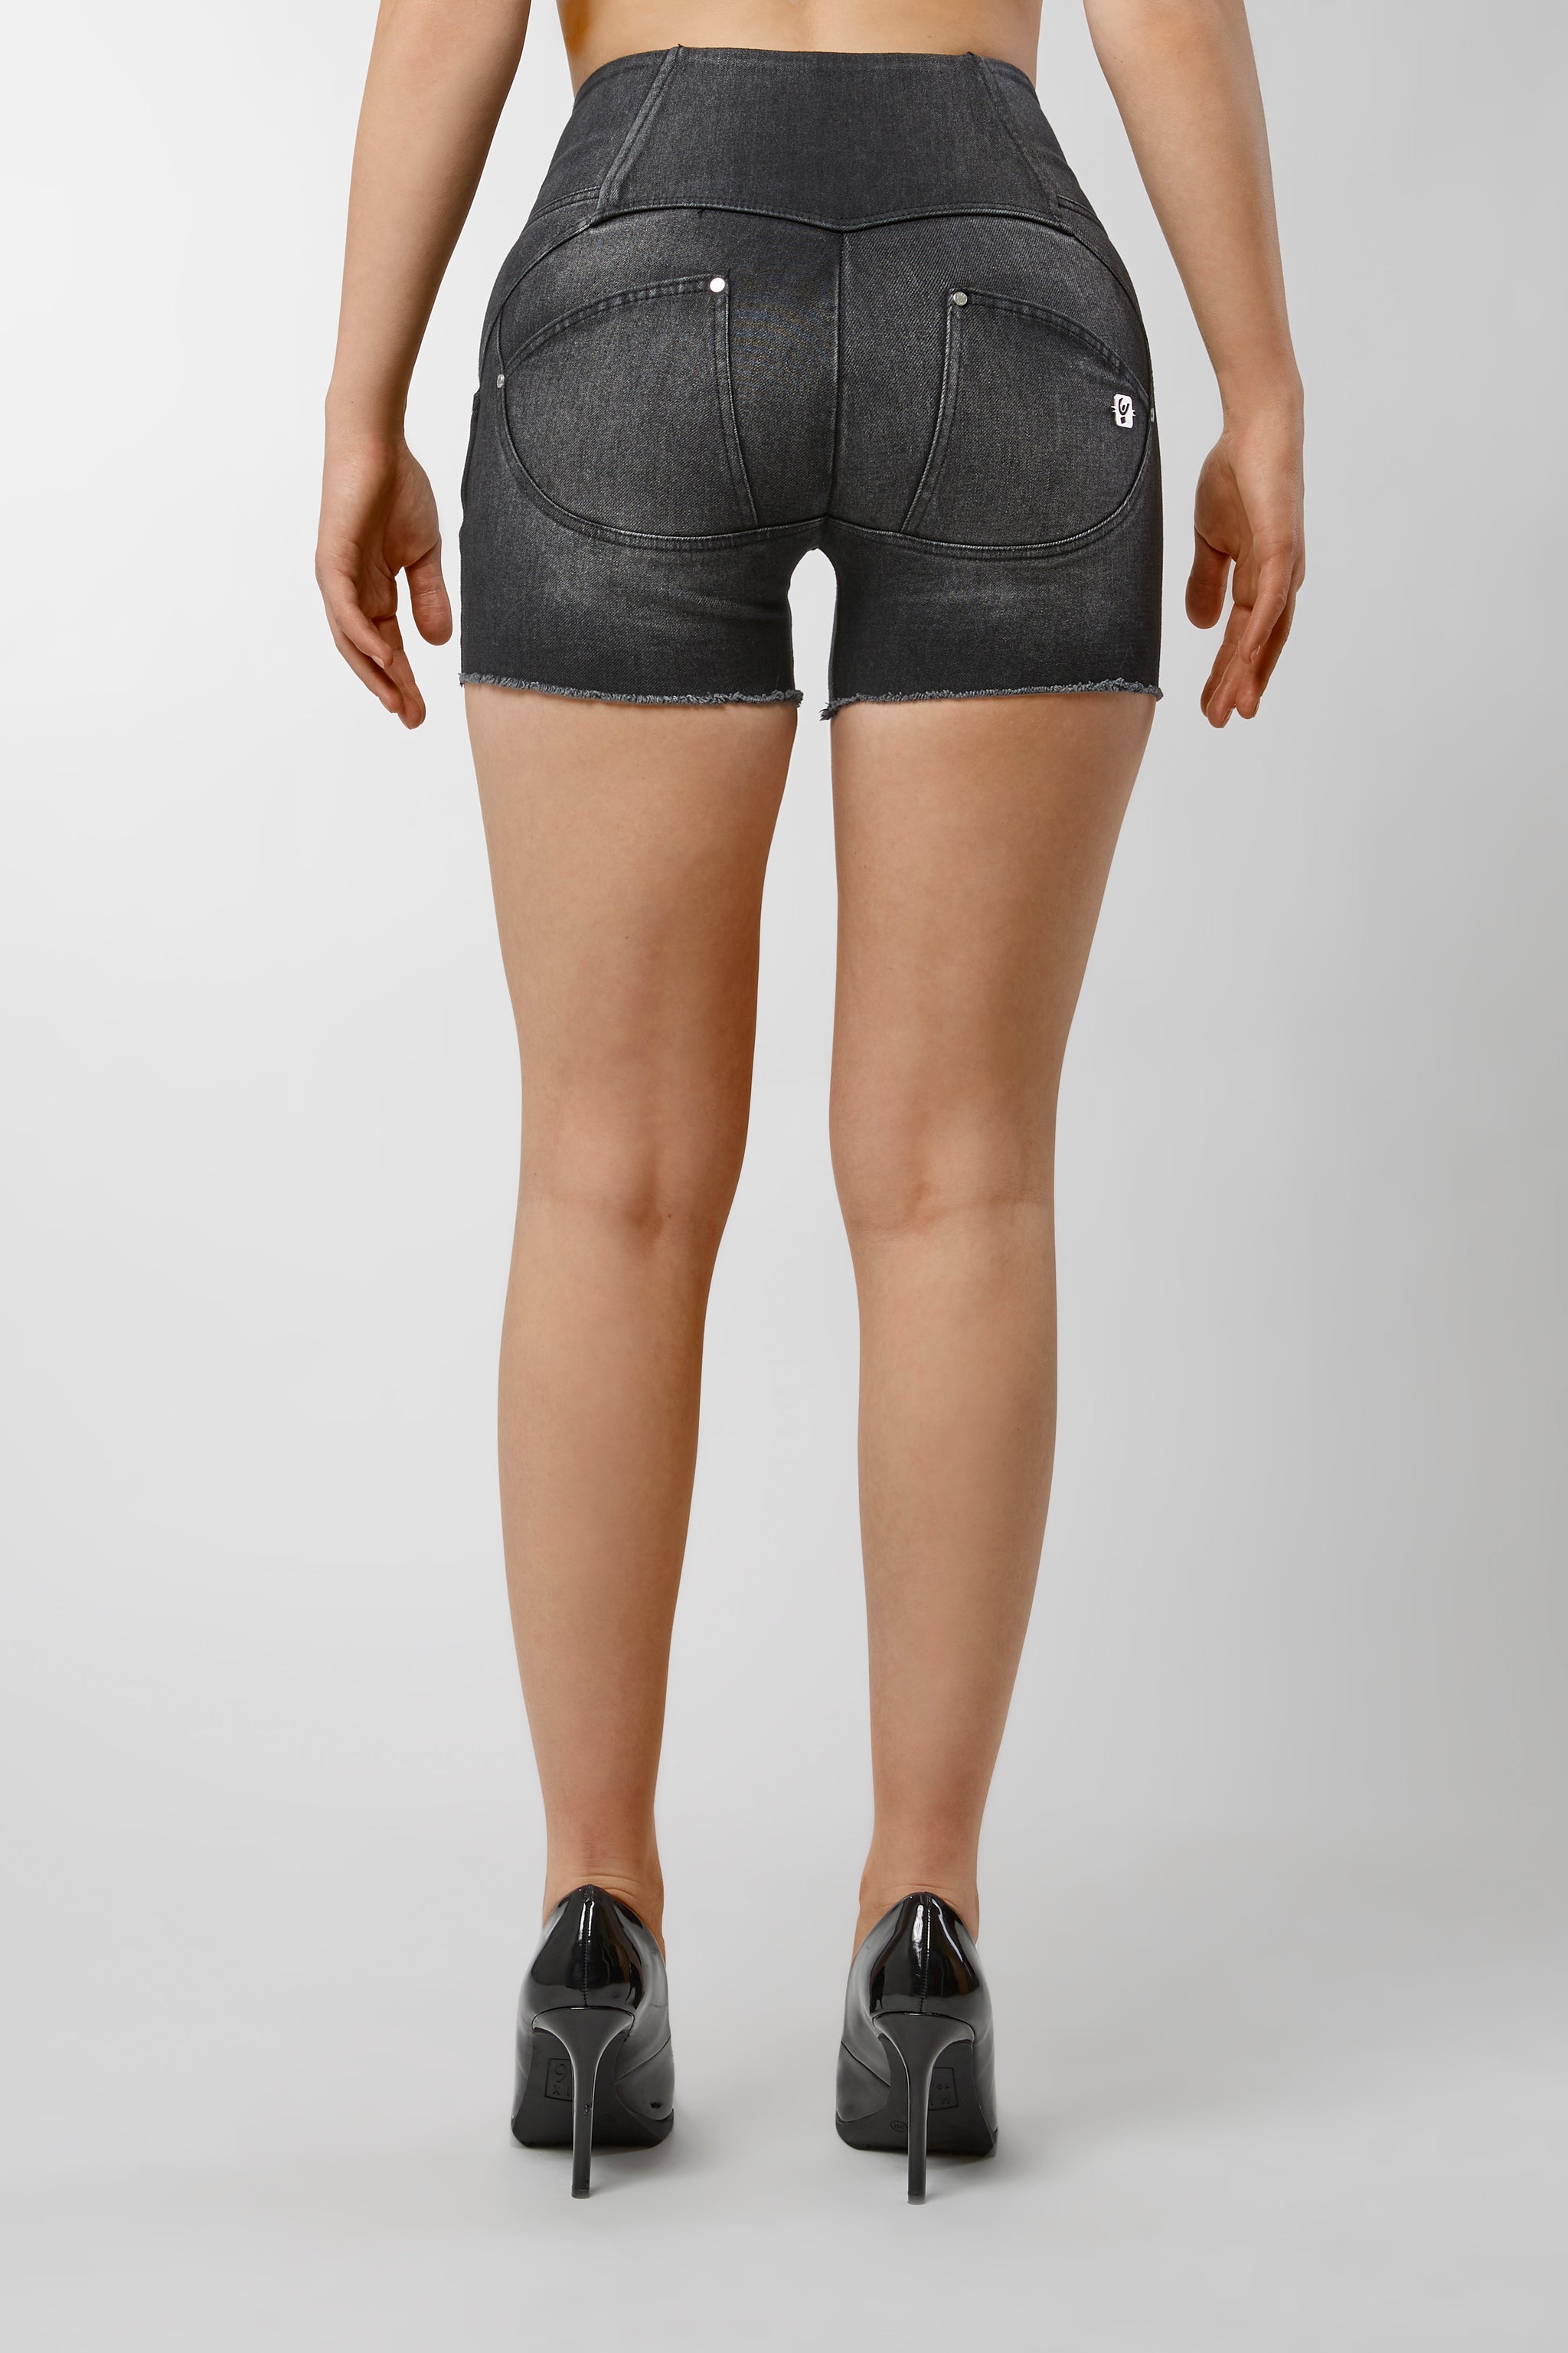 Gibobby Womens Jean Shorts Womens 7 inch Inseam Super Comfy Bermuda Walking  Shorts Stylish 